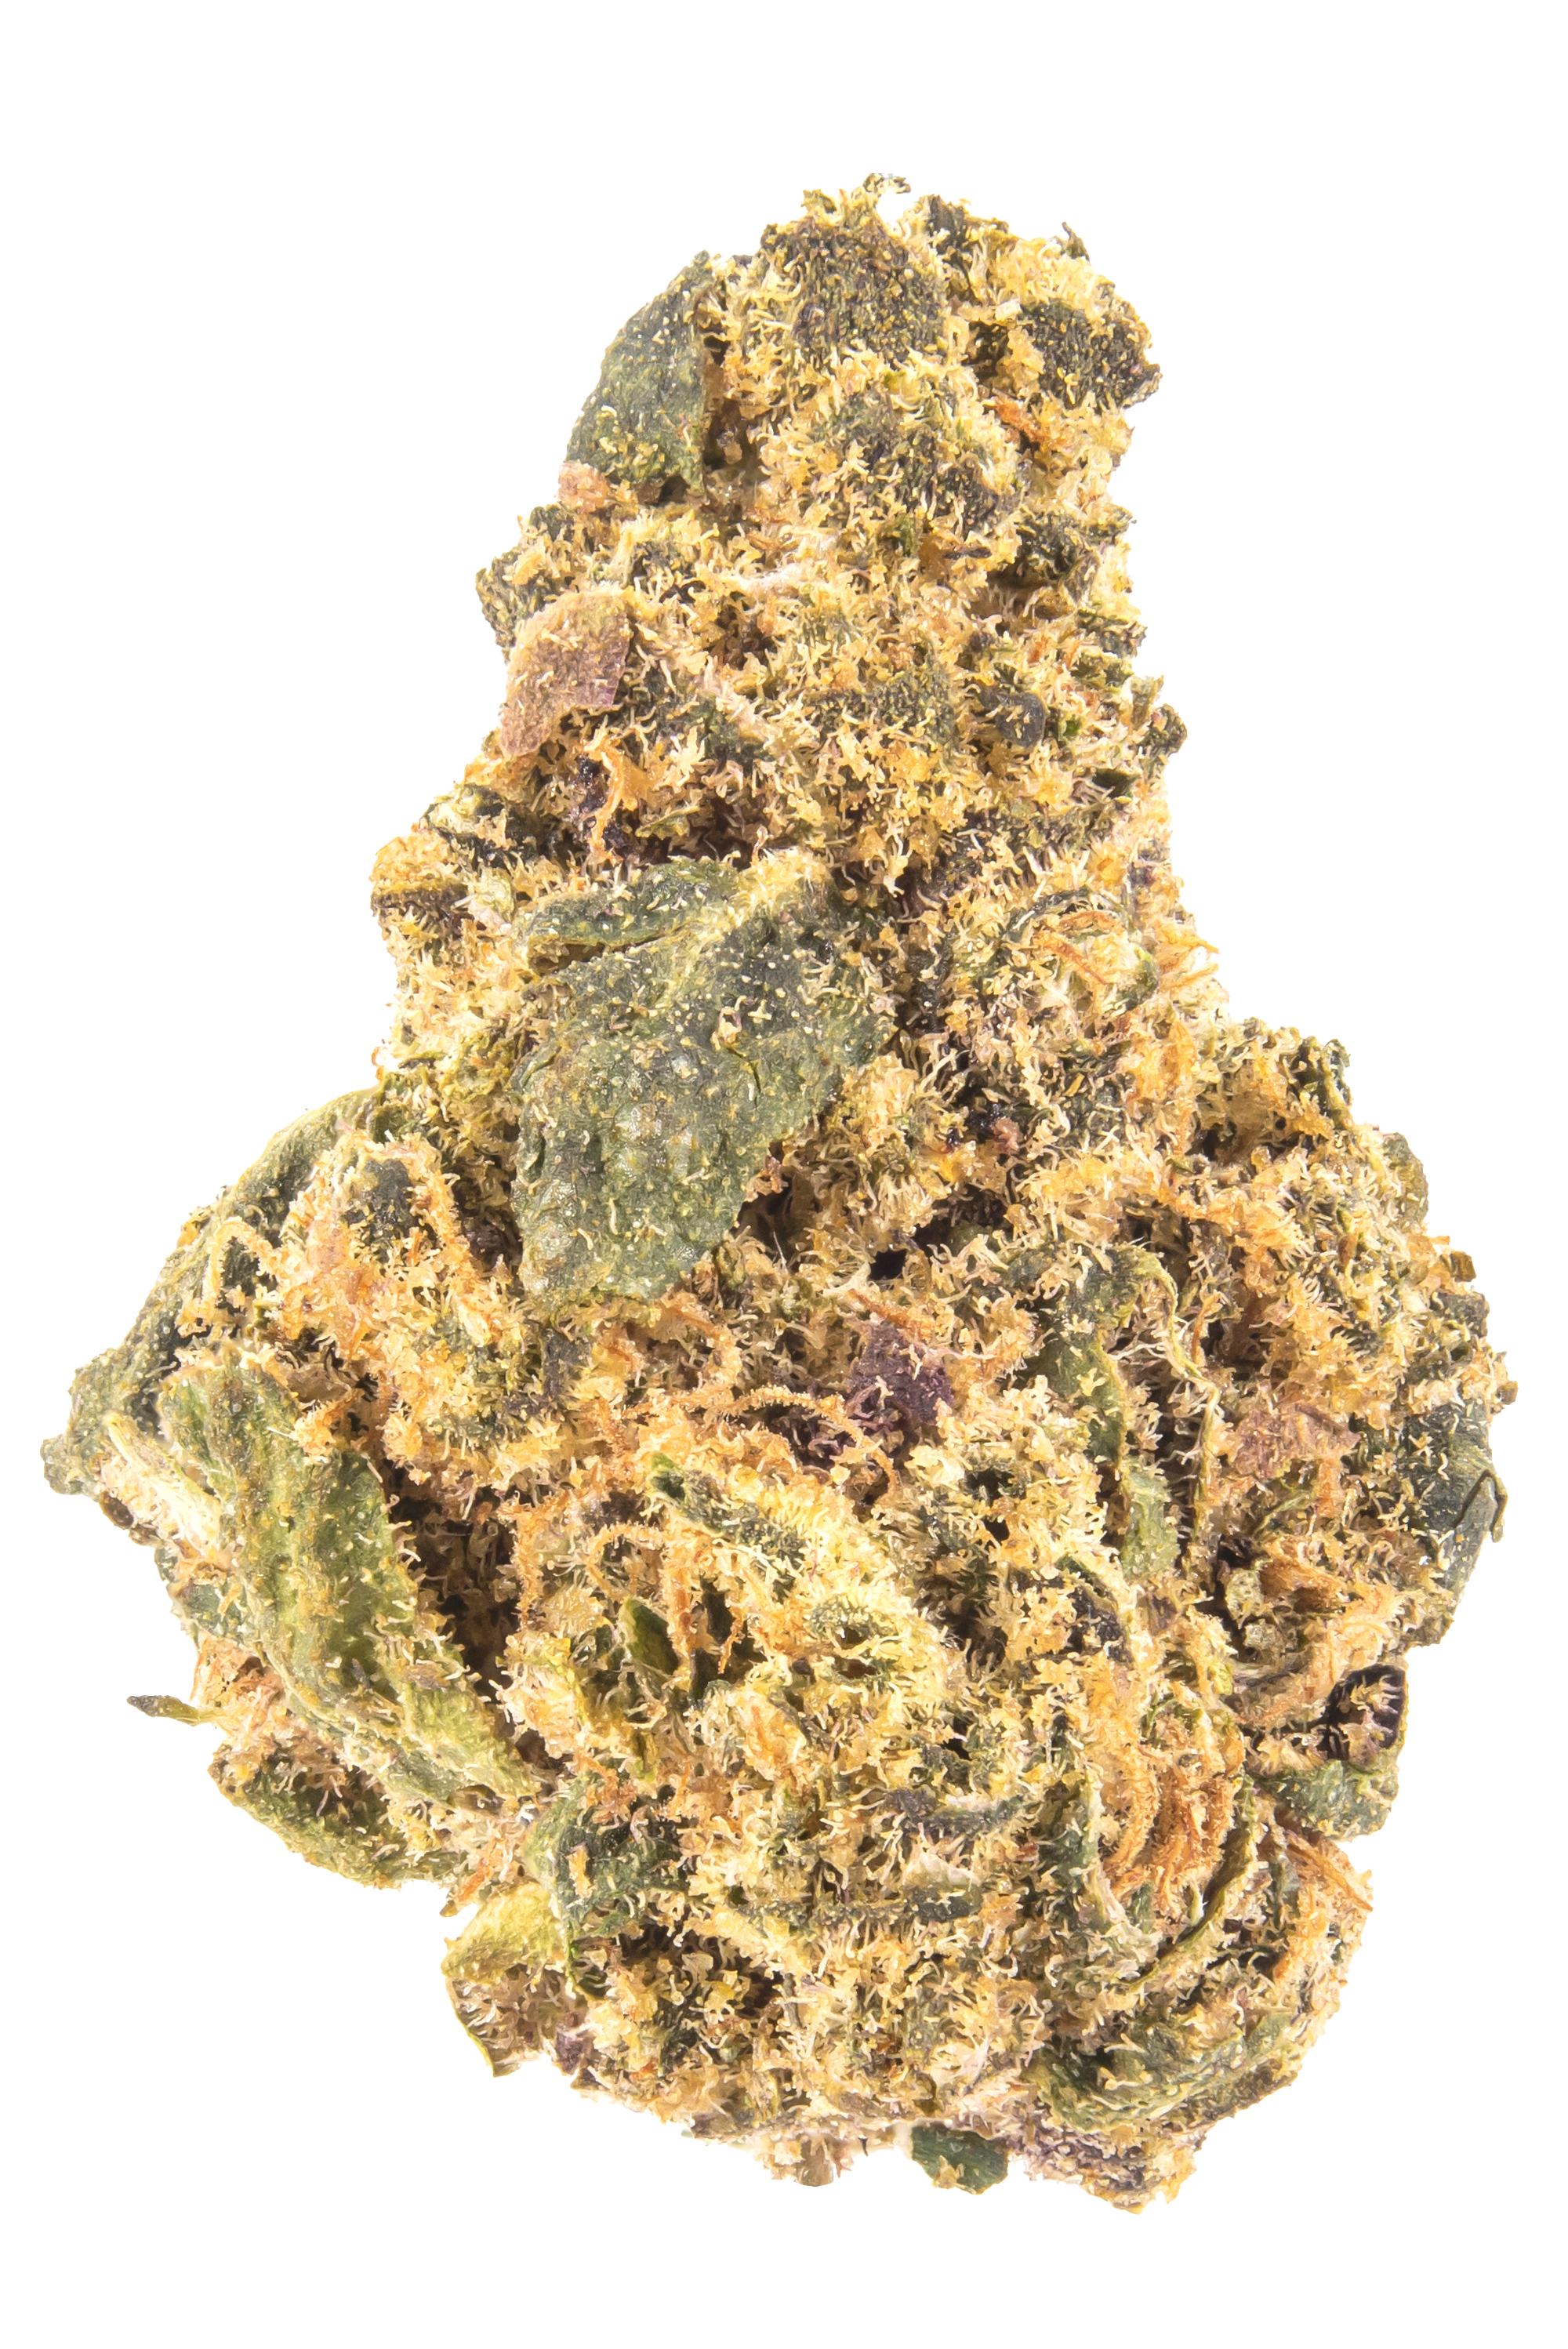 True Mints - Hybrid Cannabis Strain